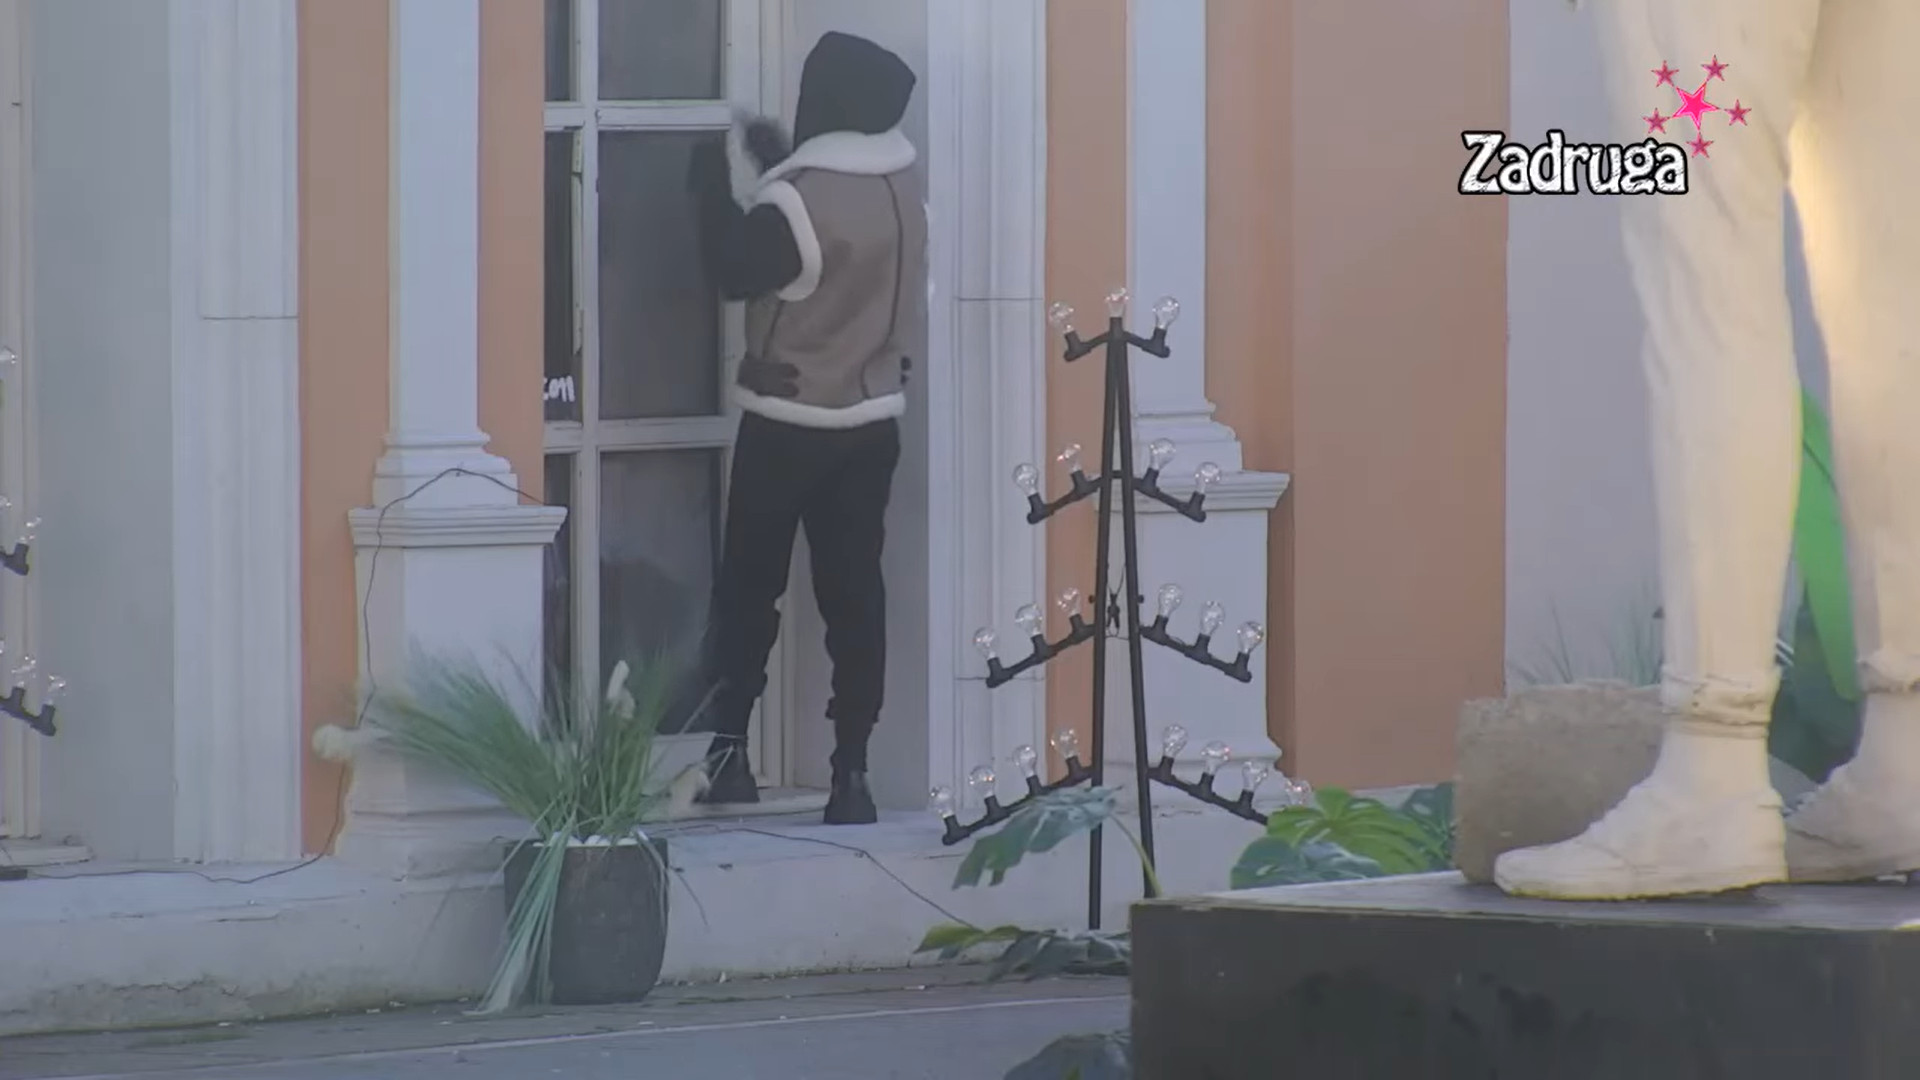 ANĐELA ĐURIČIĆ POBEGLA IZ ZADRUGE Pre pola sata slomila vrata i otišla, dokusurila je Ana! TU JE I SNIMAK BEKSTVA (VIDEO)